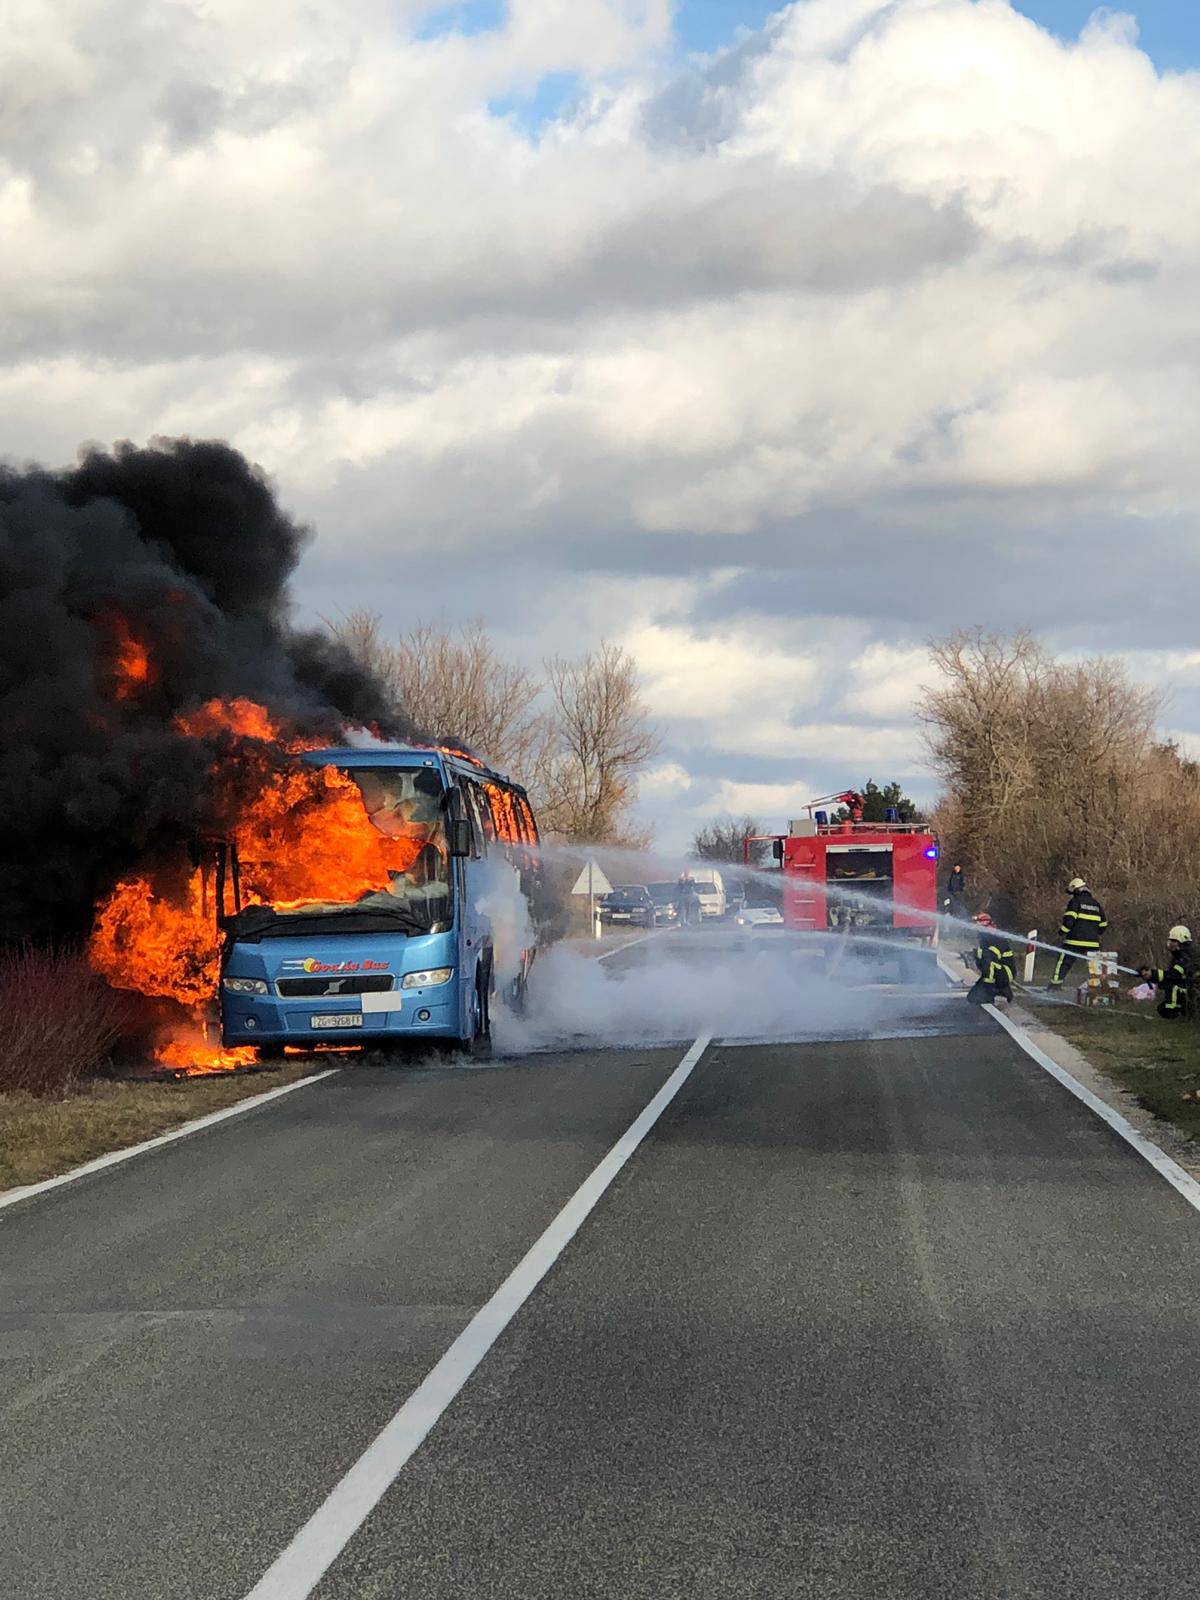 Drama kod Zadra: Putovali za Zagreb pa se zapalio autobus